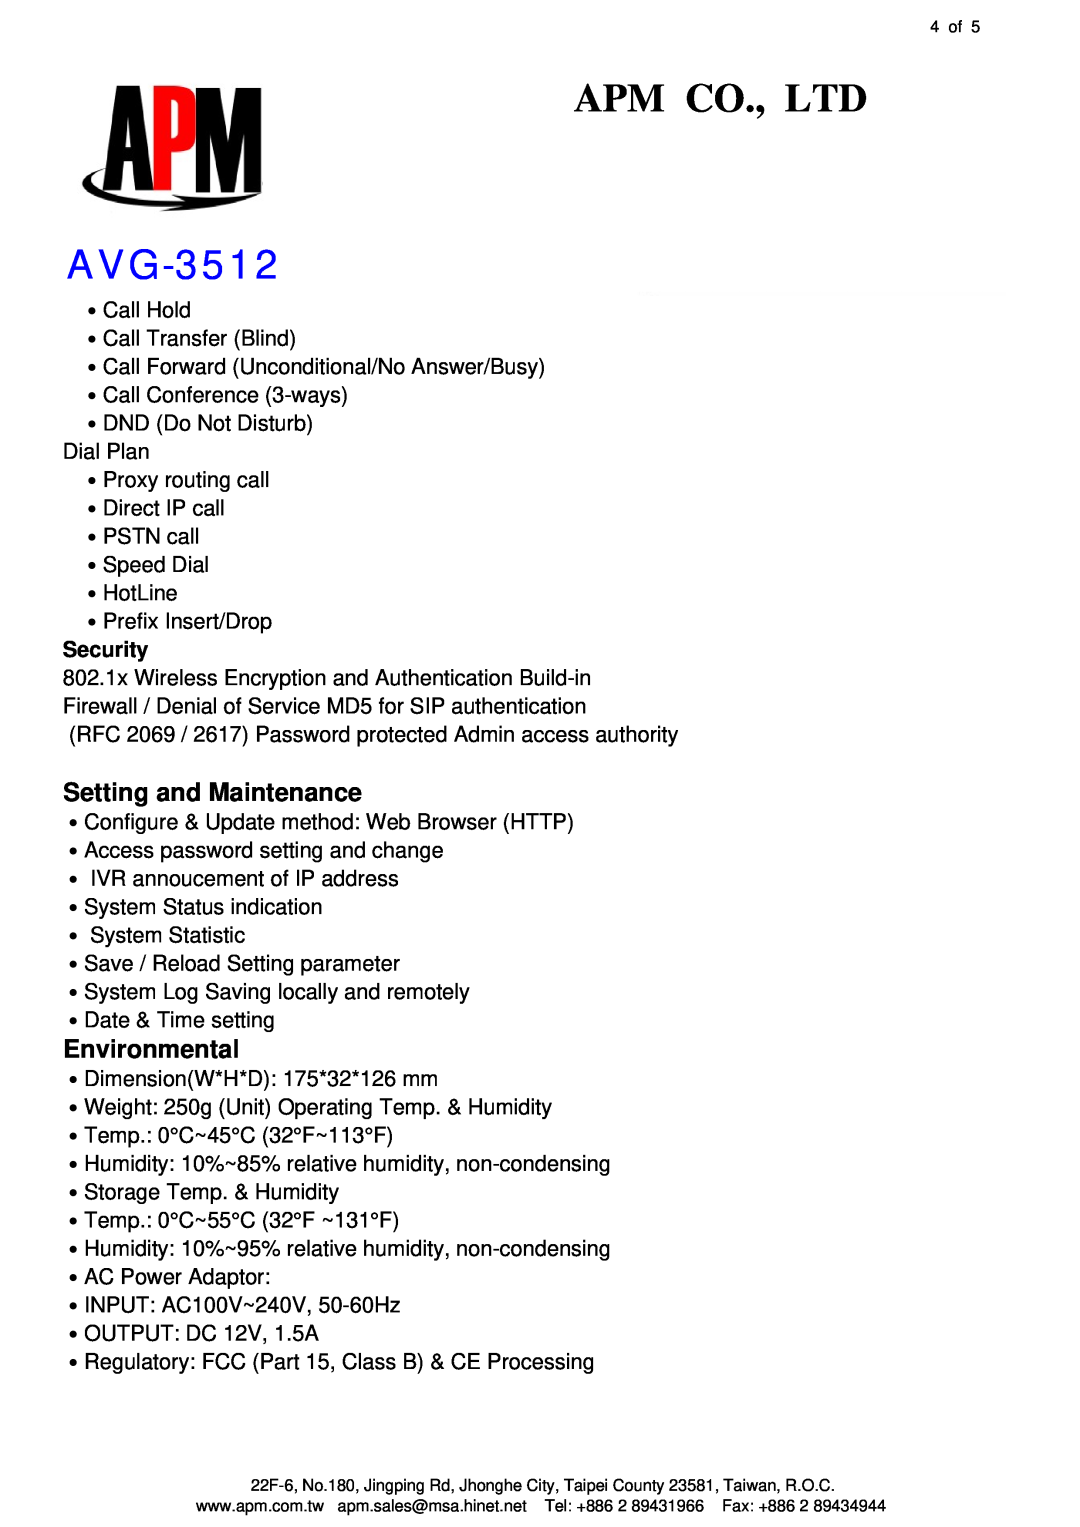 APM AVG-3512 manual Setting and Maintenance, Environmental, Security 